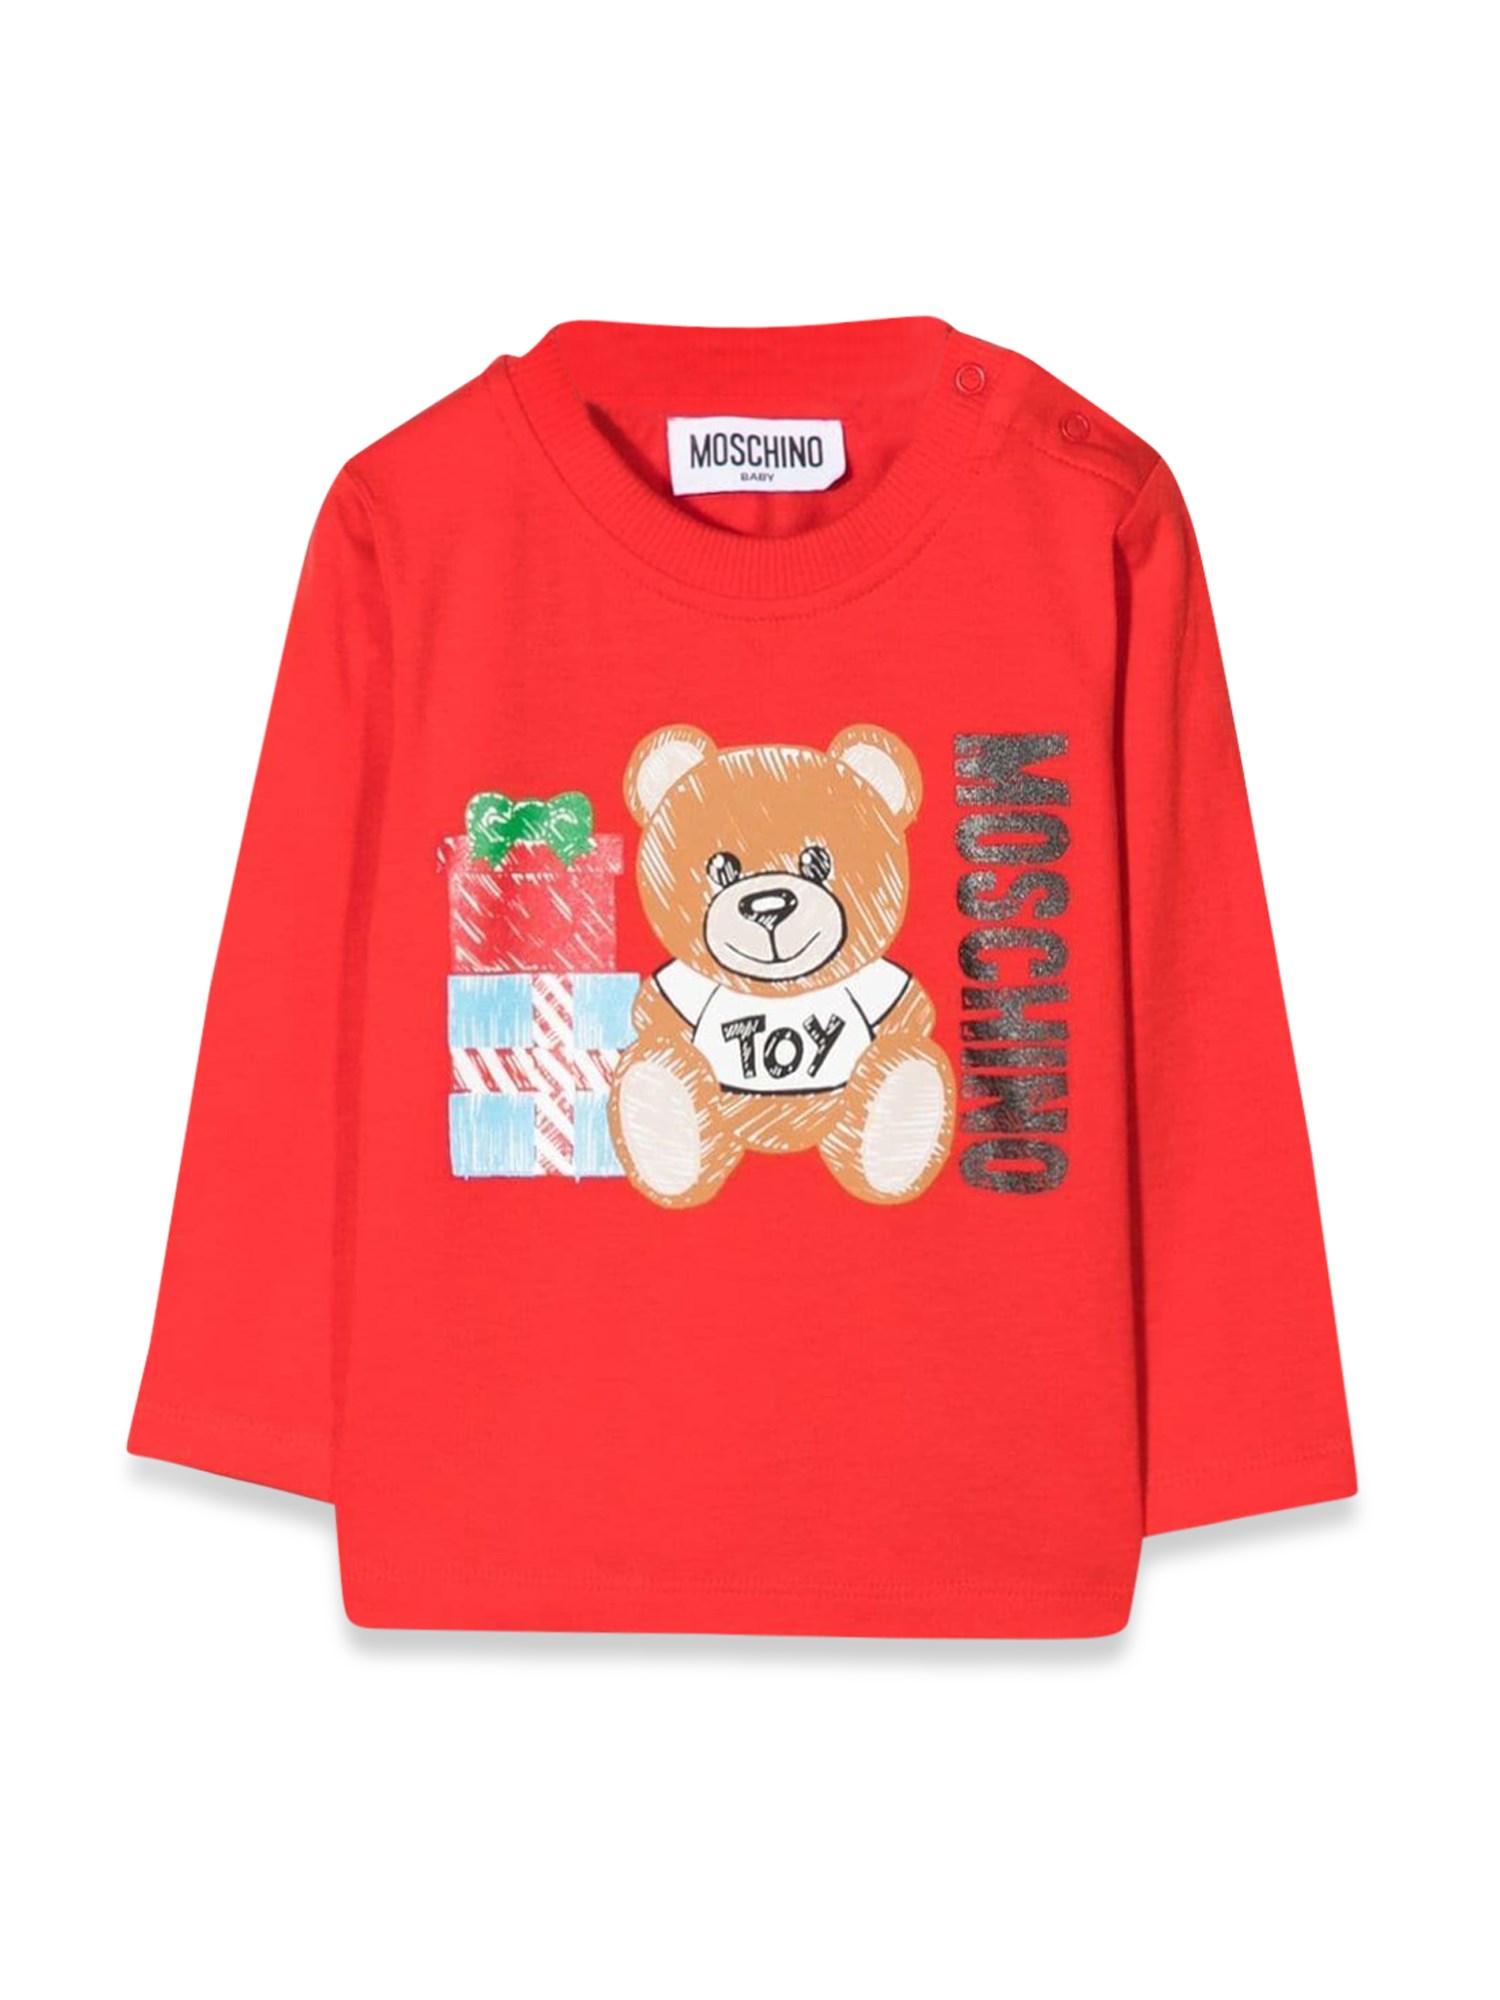 moschino t-shirt m/l teddy bear gifts